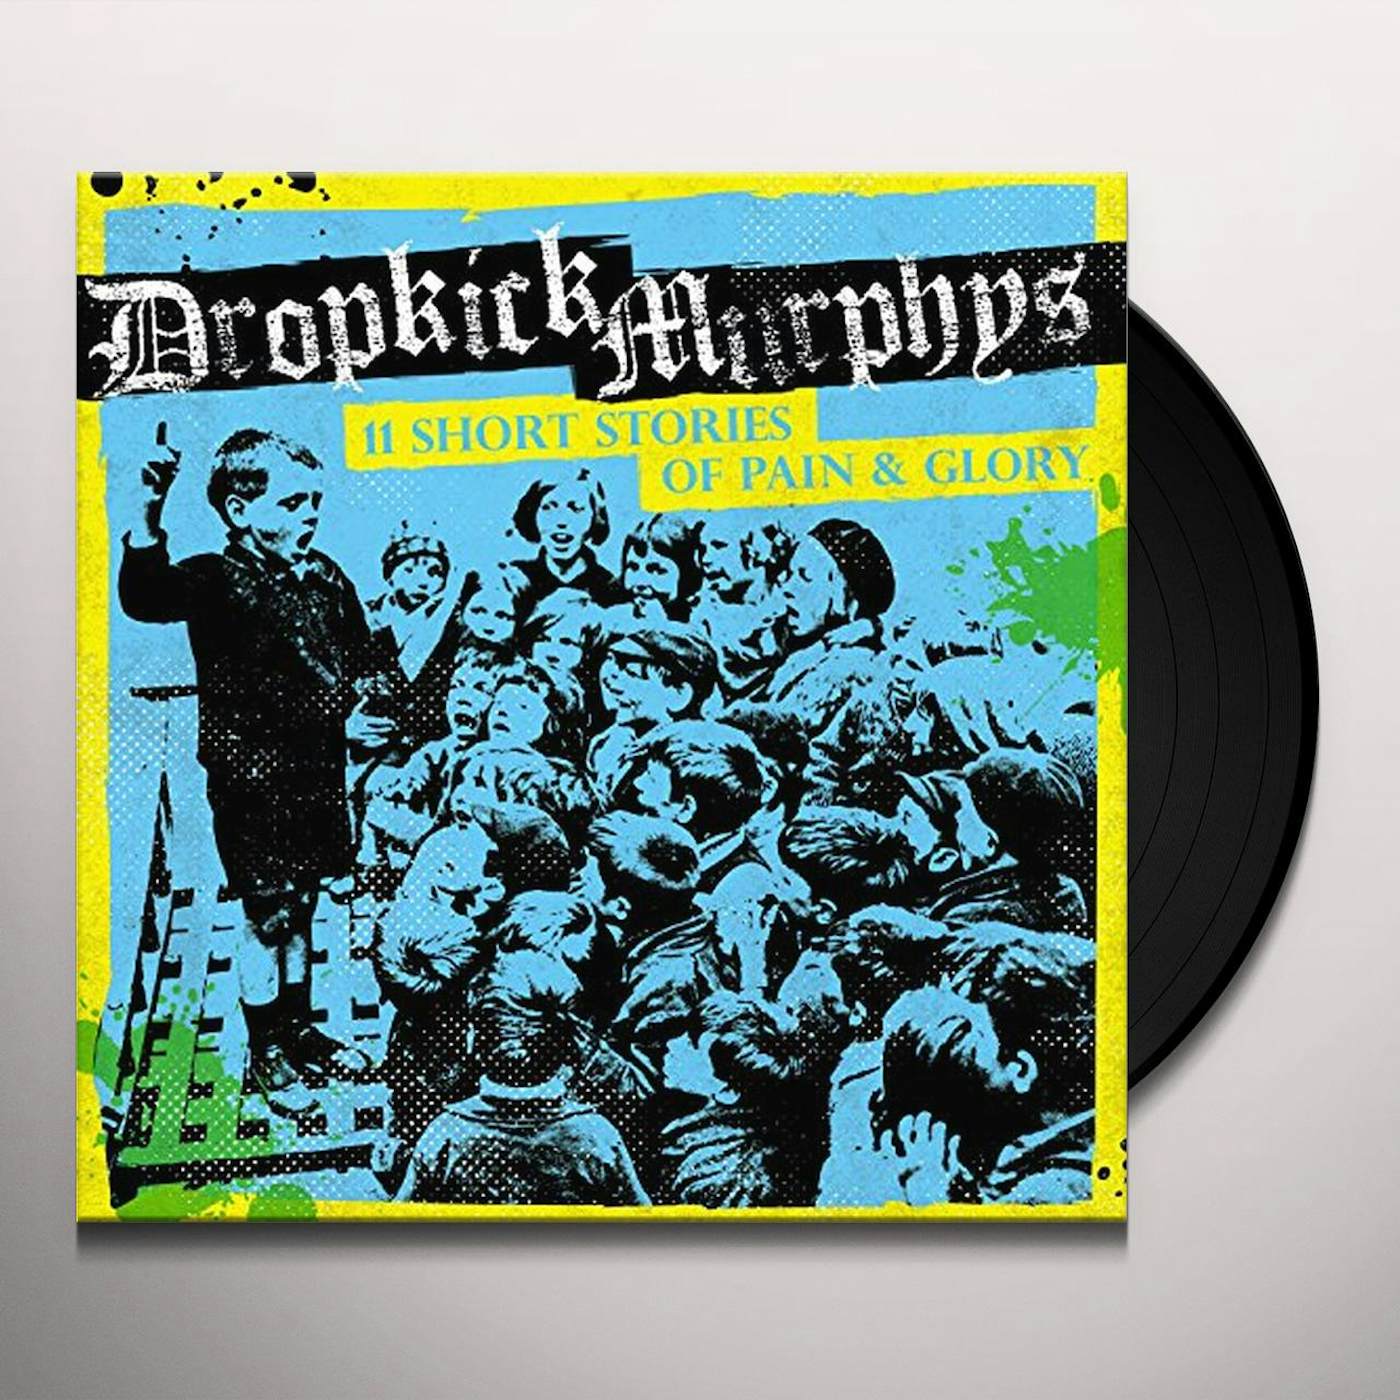 Dropkick Murphys 11 Short Stories of Pain & Glory Vinyl Record